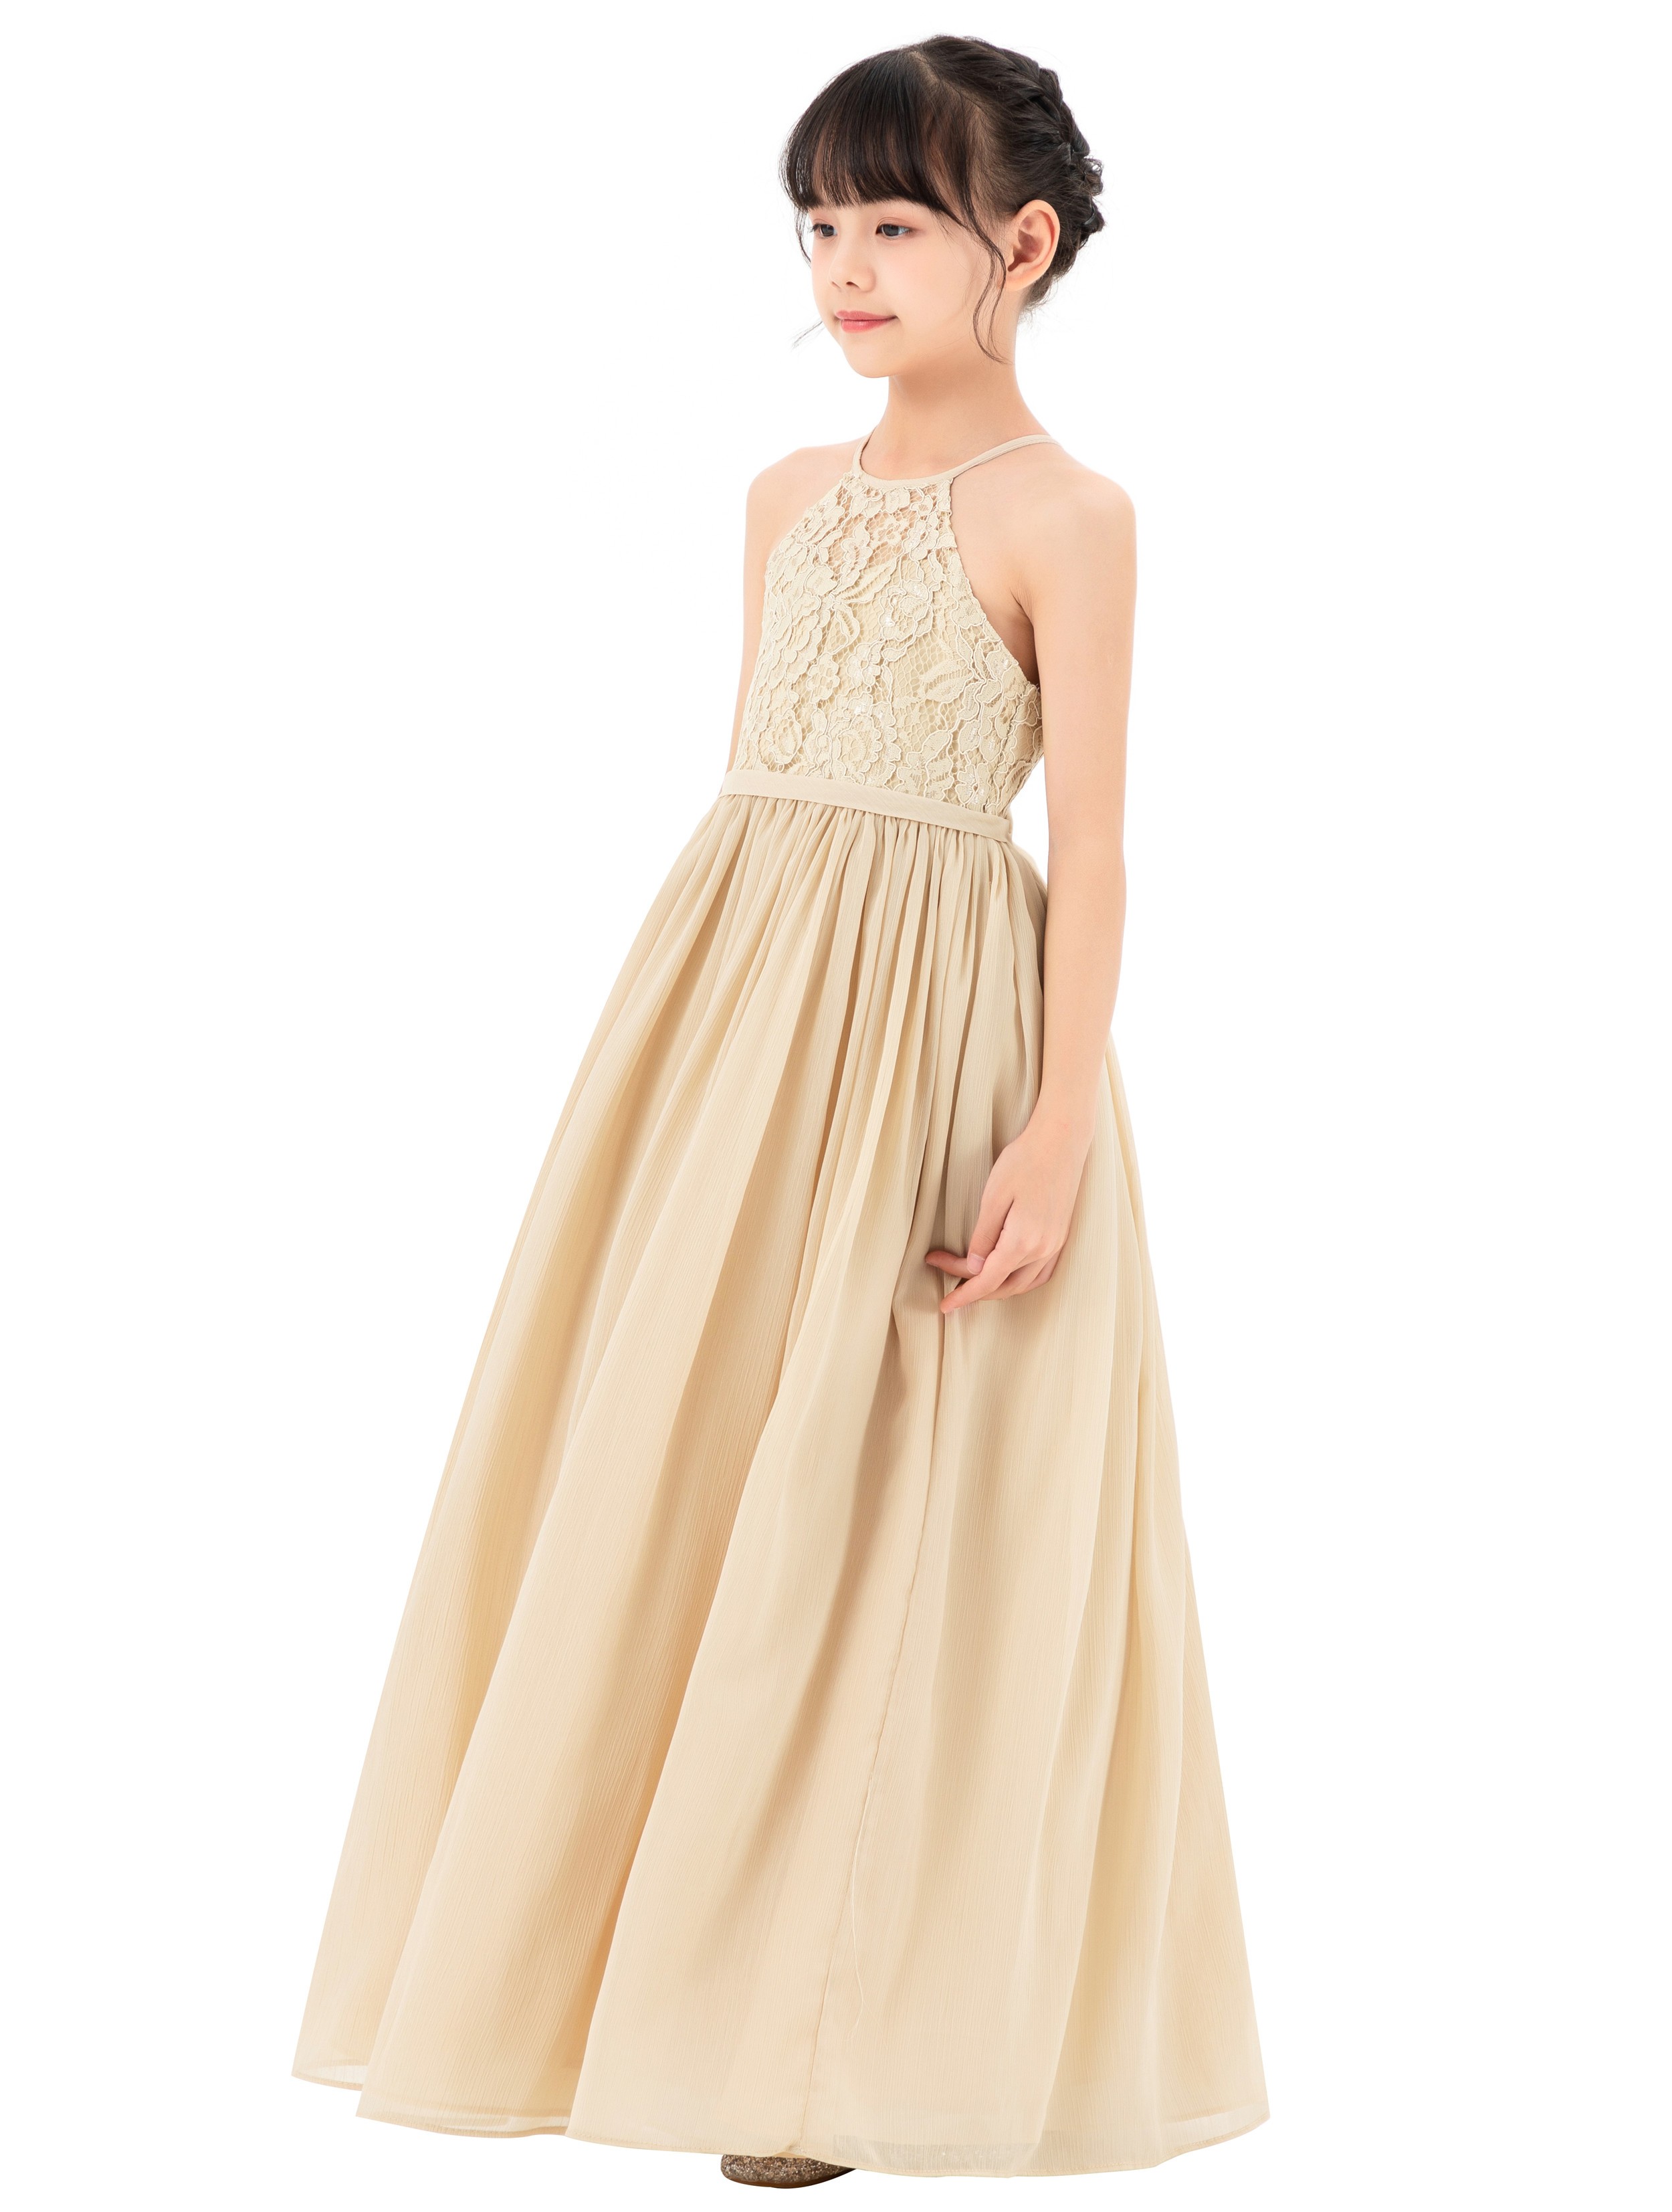 Champagne Halter Lace Dress Criss-Cross Flower Girl Dress L248